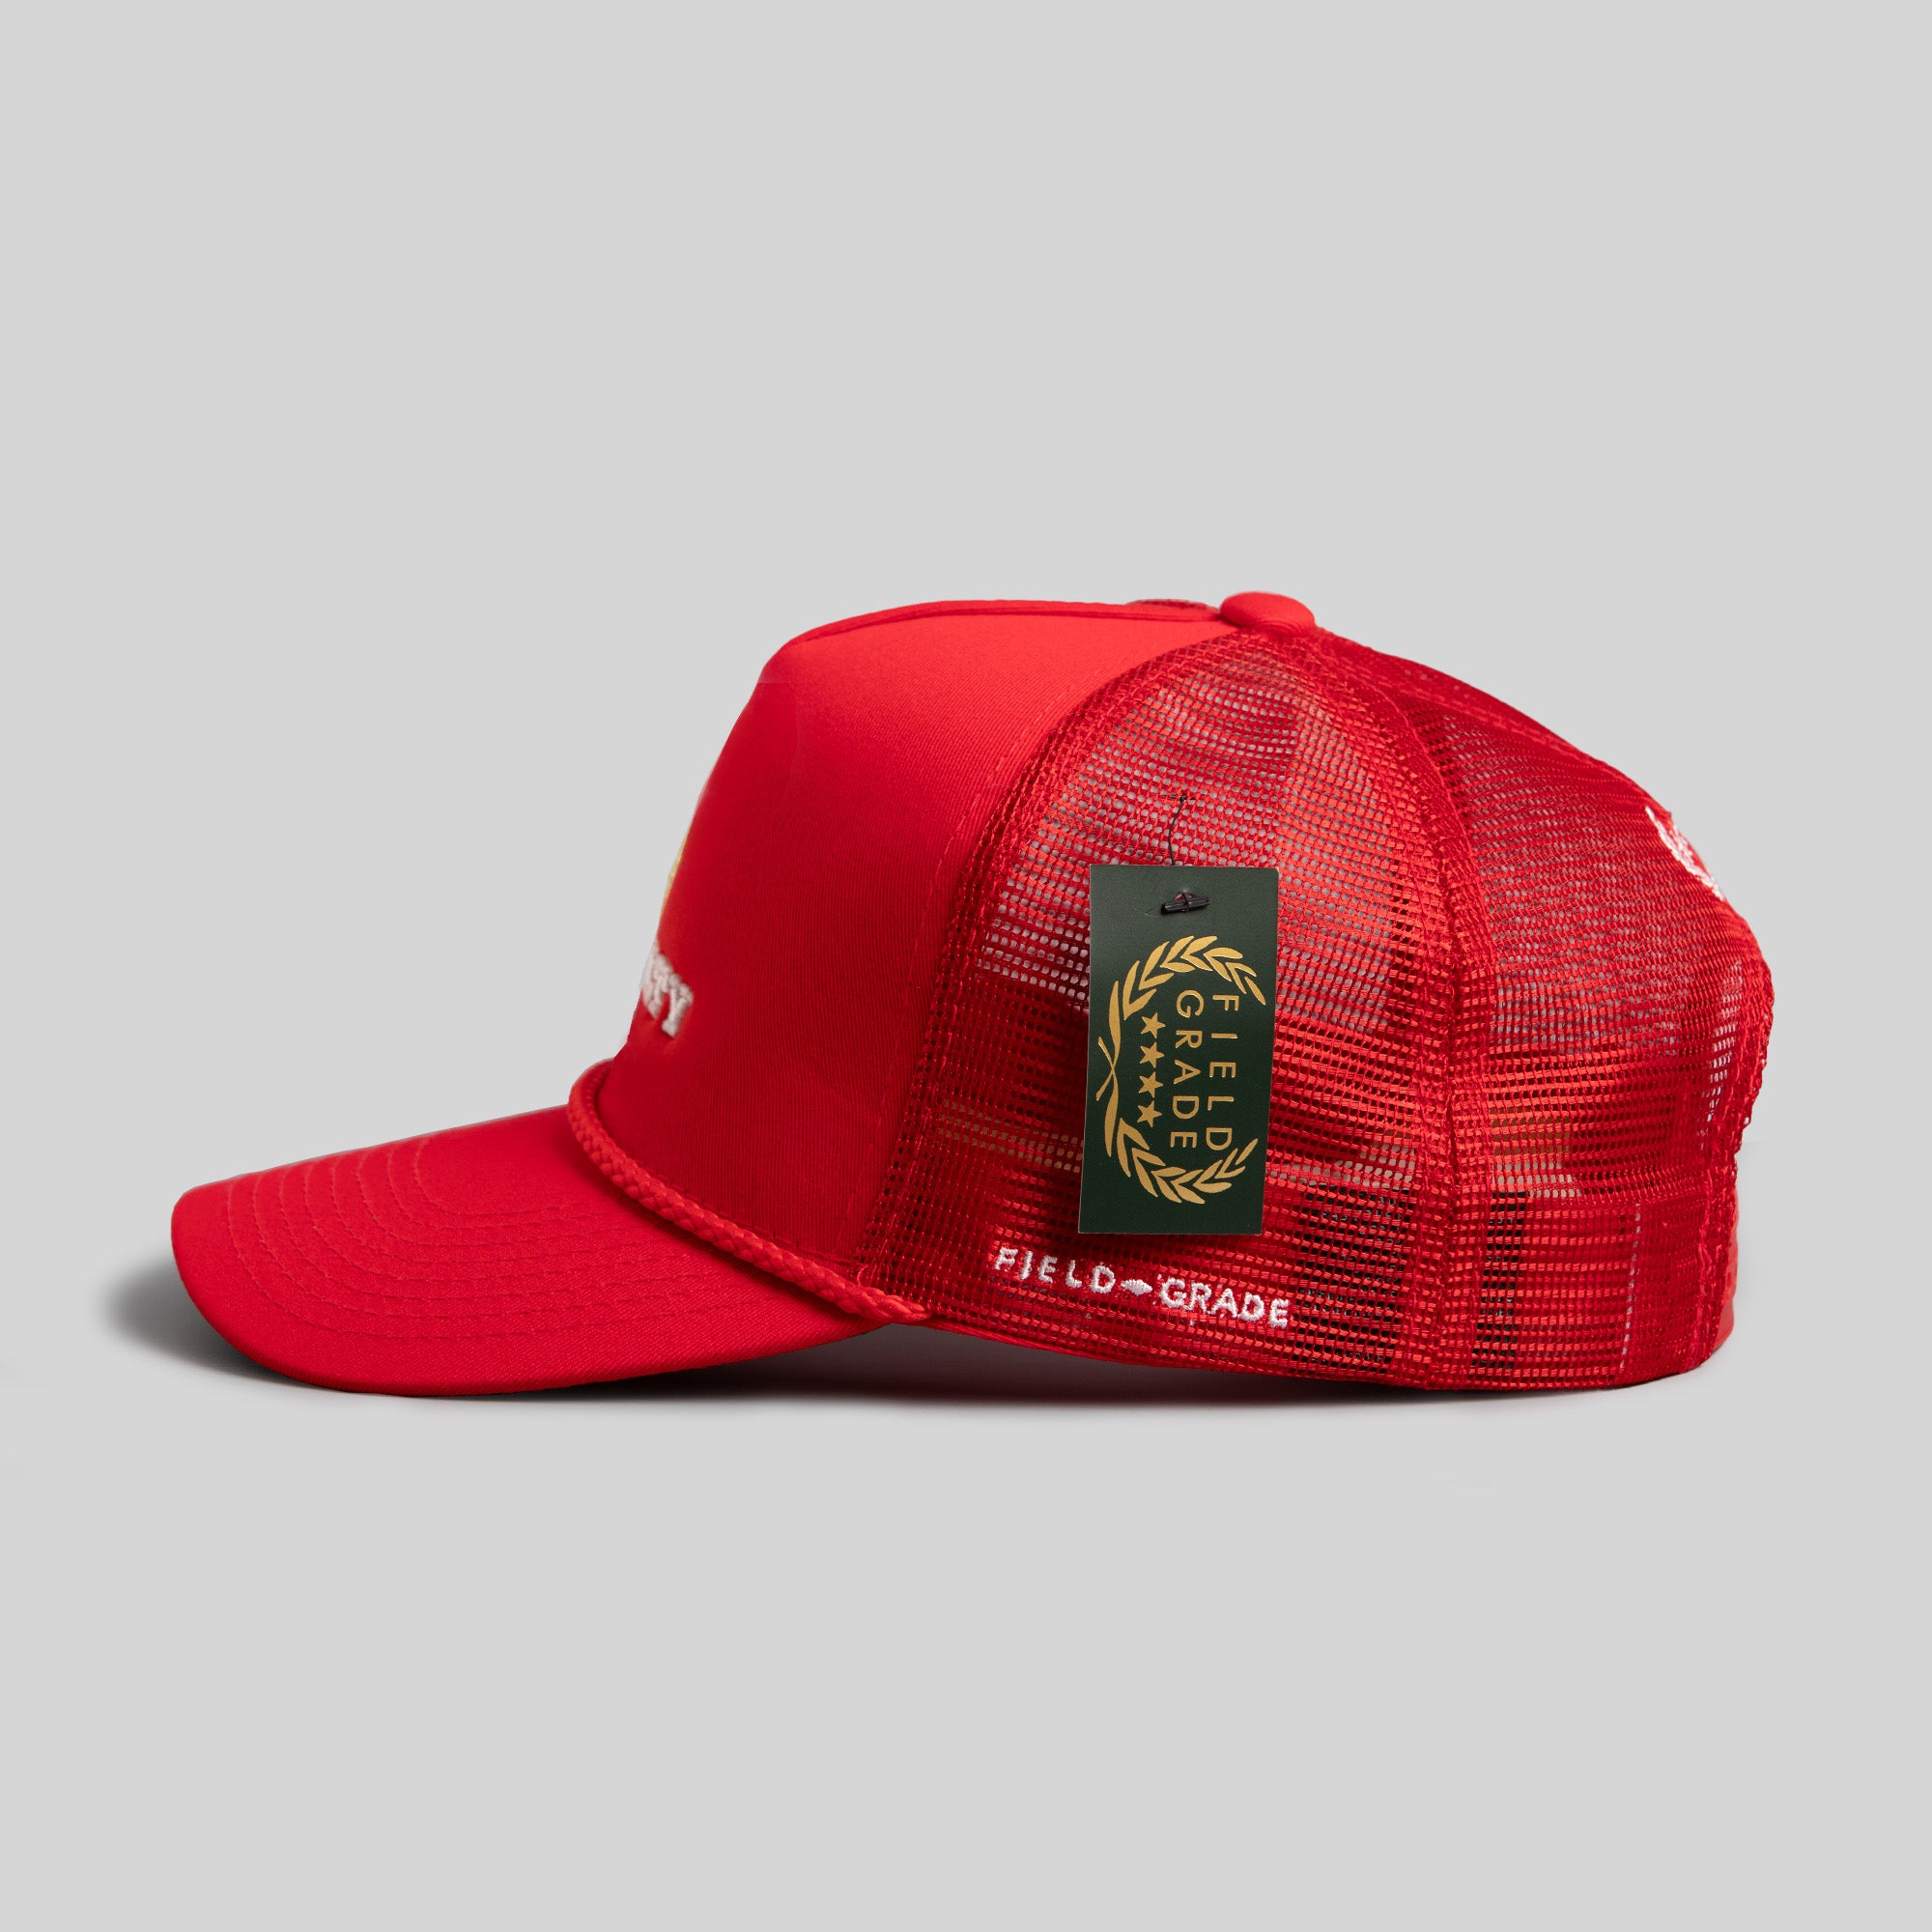 ROYALTY VARSITY RED TRUCKER HAT